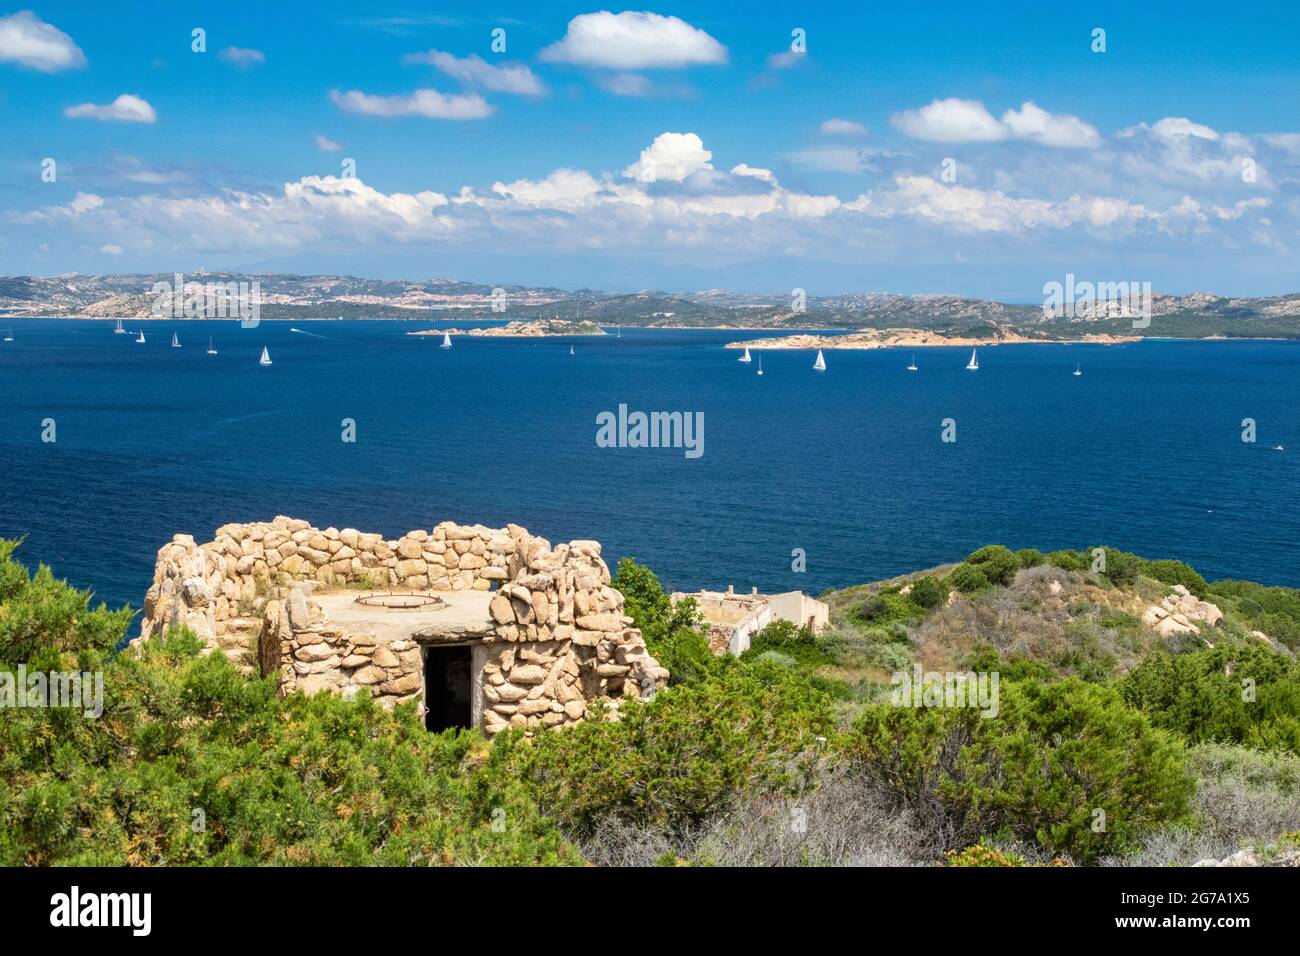 Coastline View of Northern Sardinia, Islands of La Maddalena & Isola Caprera With Yachts and Ruin of Batteria Battistoni Stock Photo